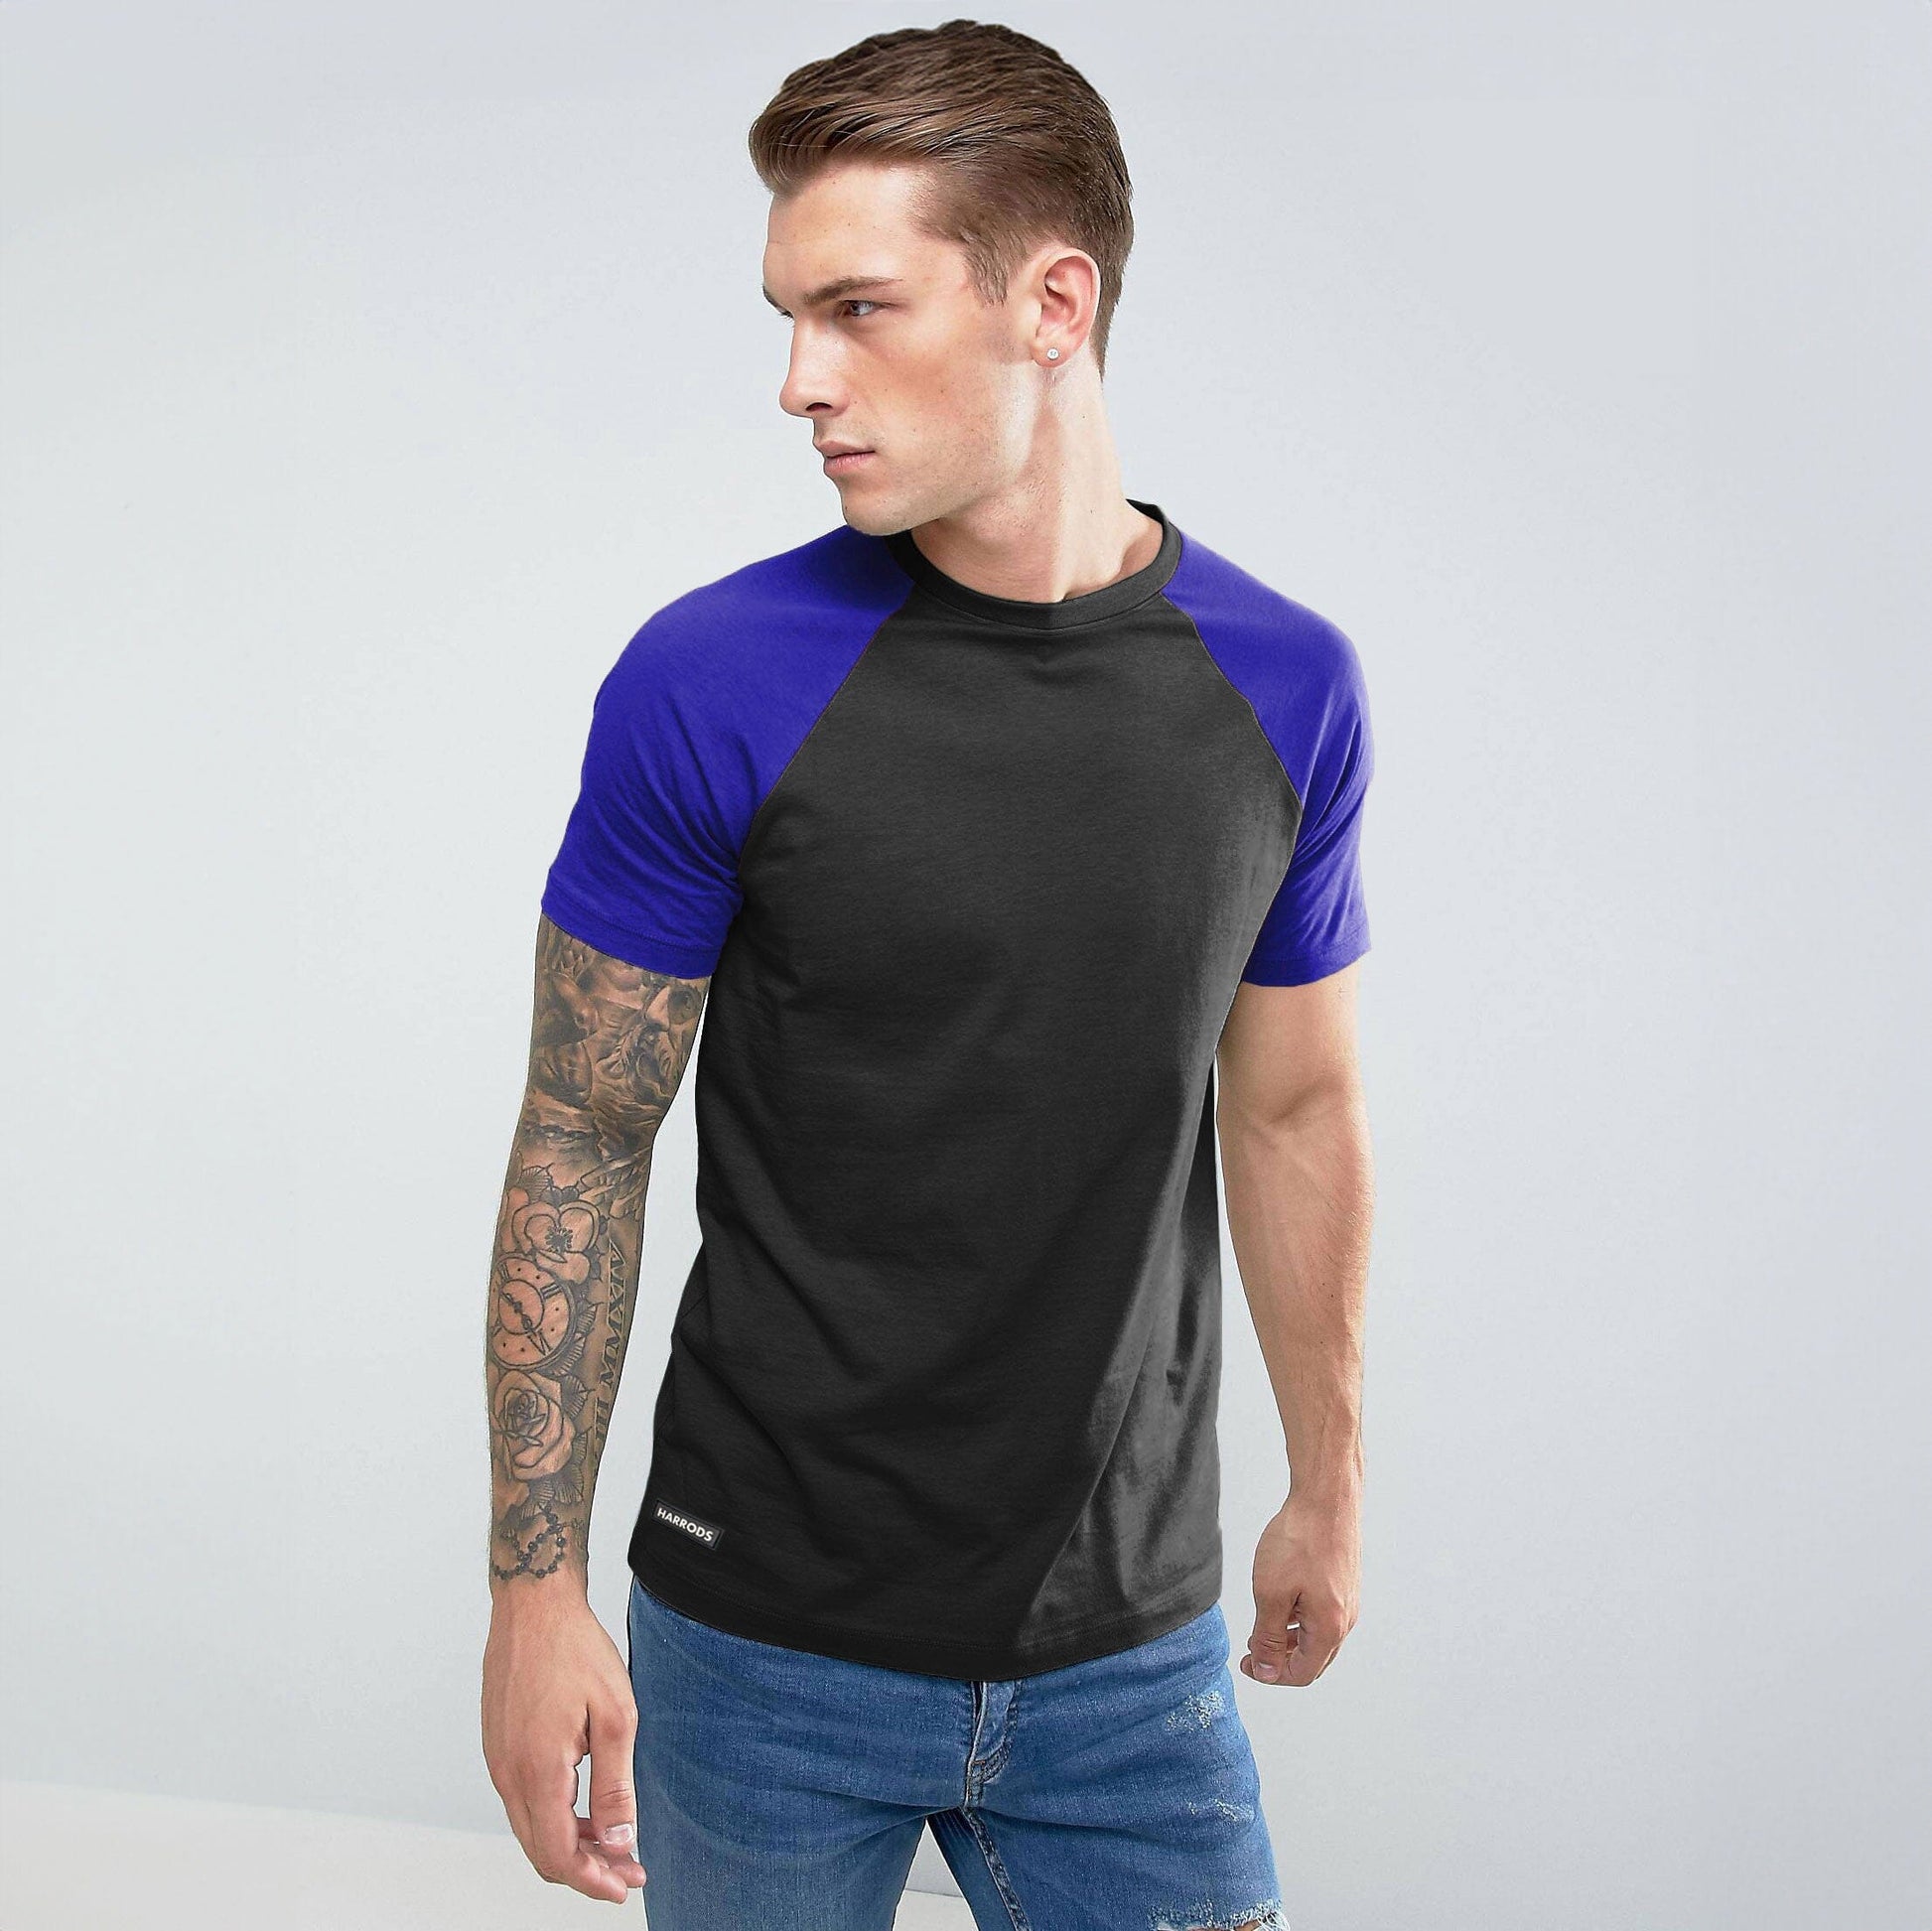 Harrods Men's Contrast Sleeve Style Crew Neck Tee Shirt Men's Tee Shirt IBT Black & Royal S 